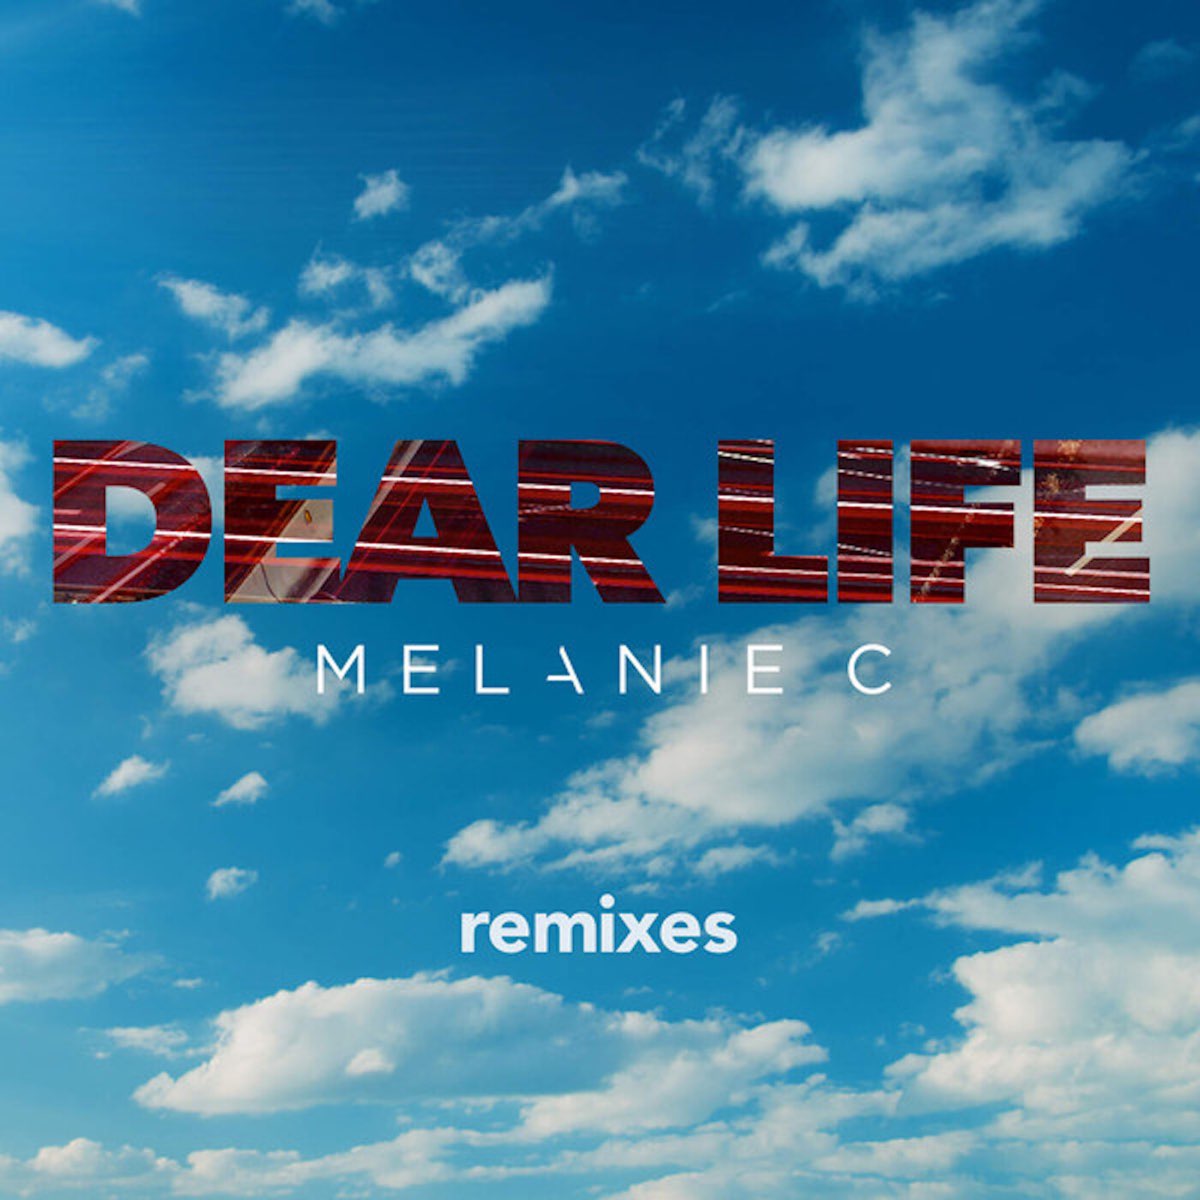 Love life remake. Ремикс на жизнь. Песня on for Dear Life. Sigma Life Remix. T.R.A.C. - Life in Remixes.